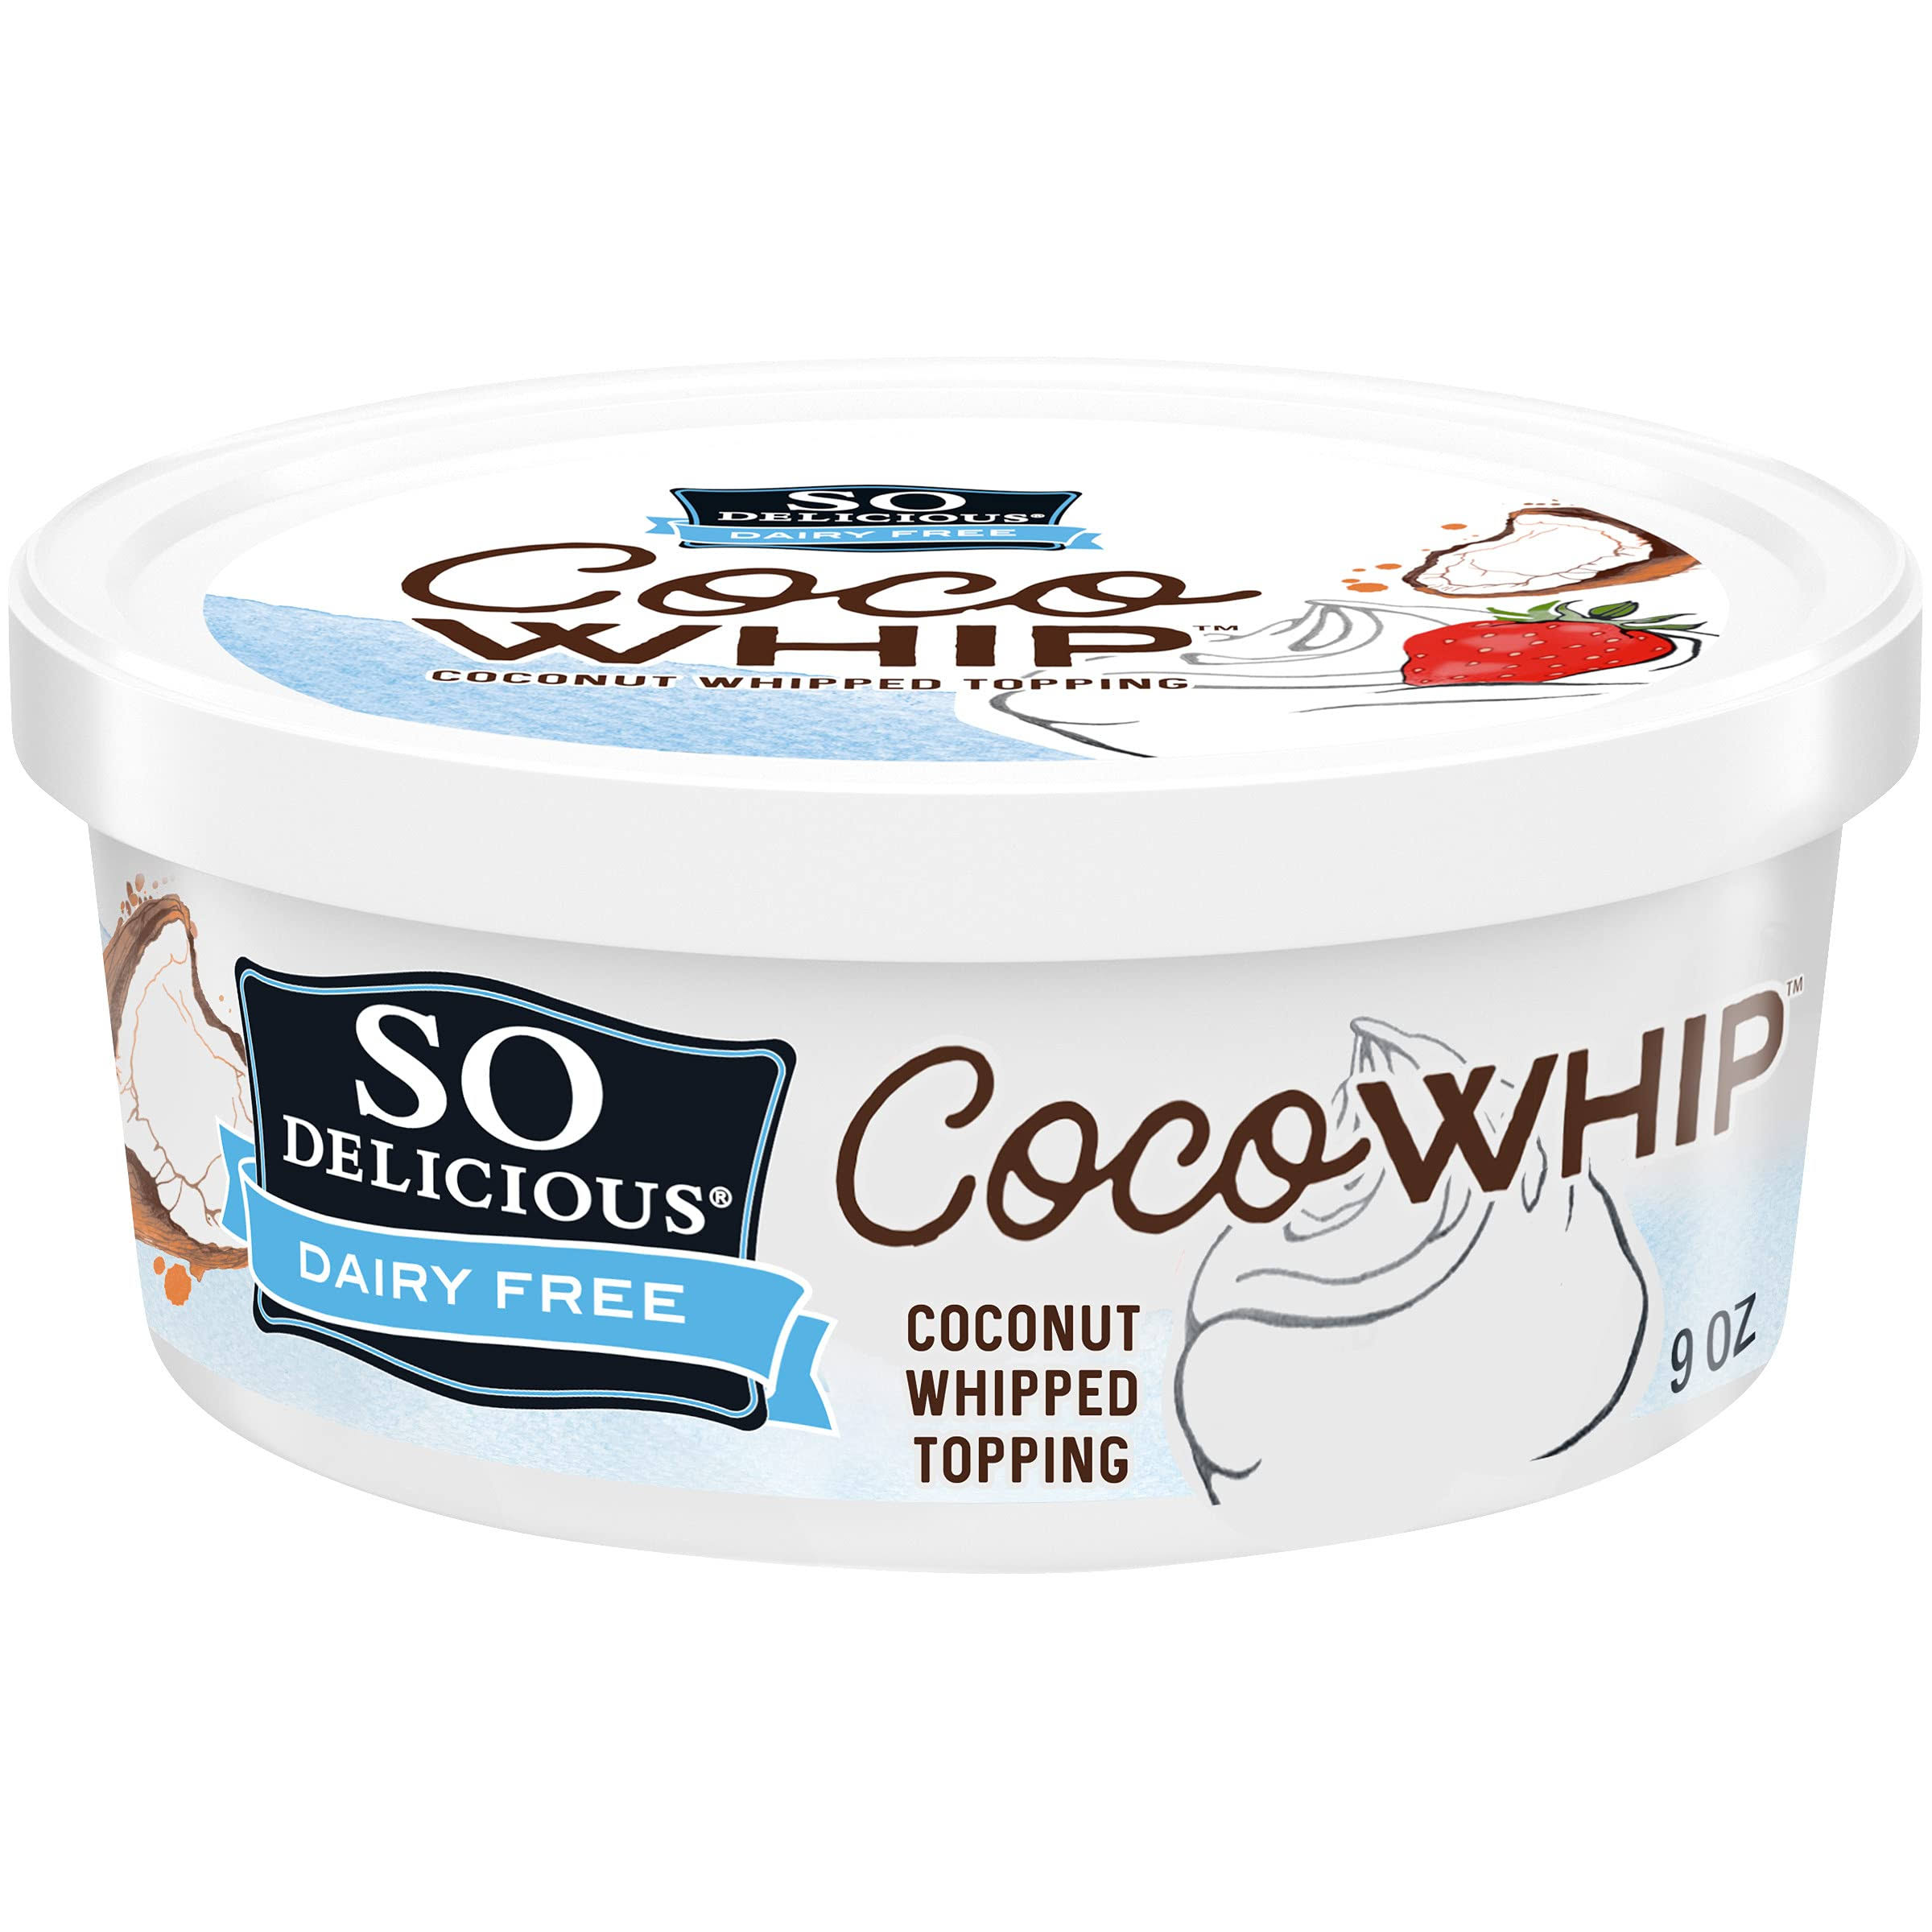 So Delicious Dairy Free Coco Whip - 9 oz